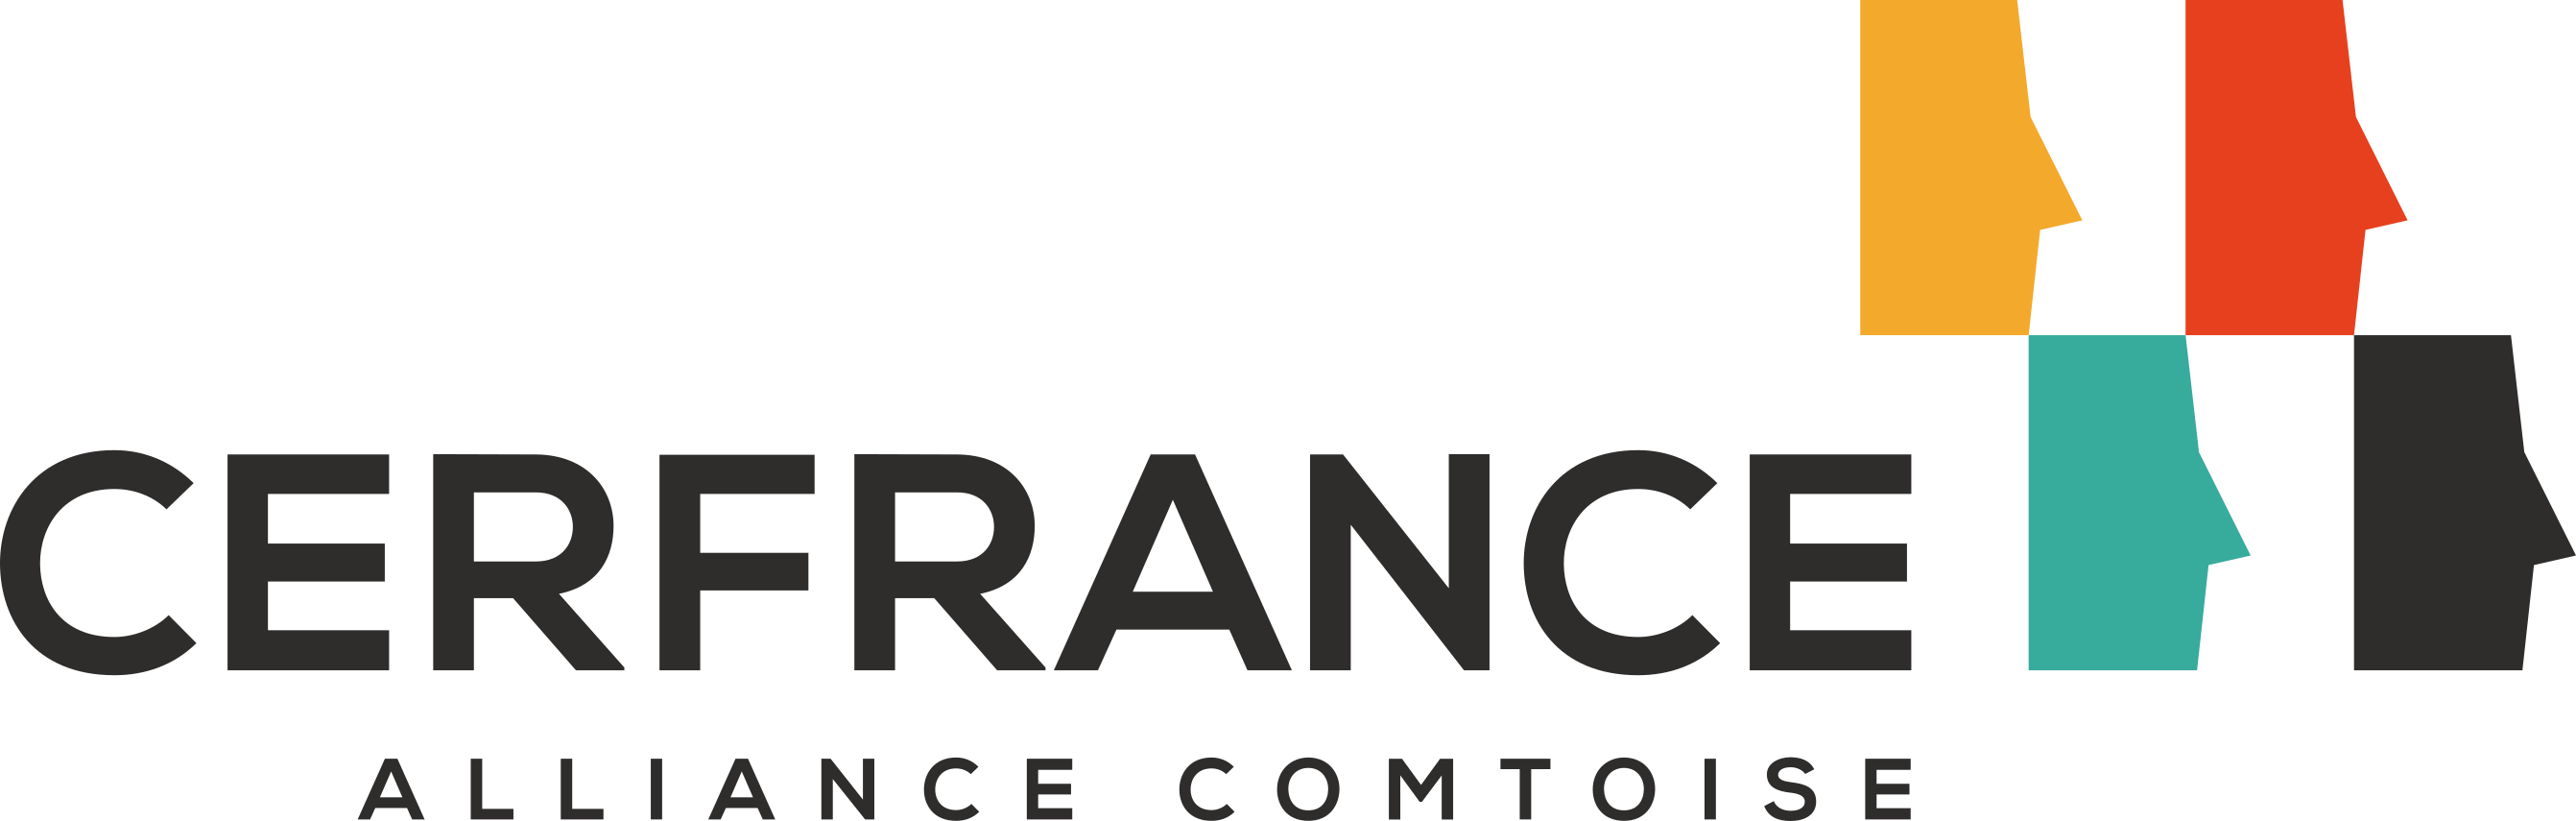 logo_cerfrance_alliance_comtoise